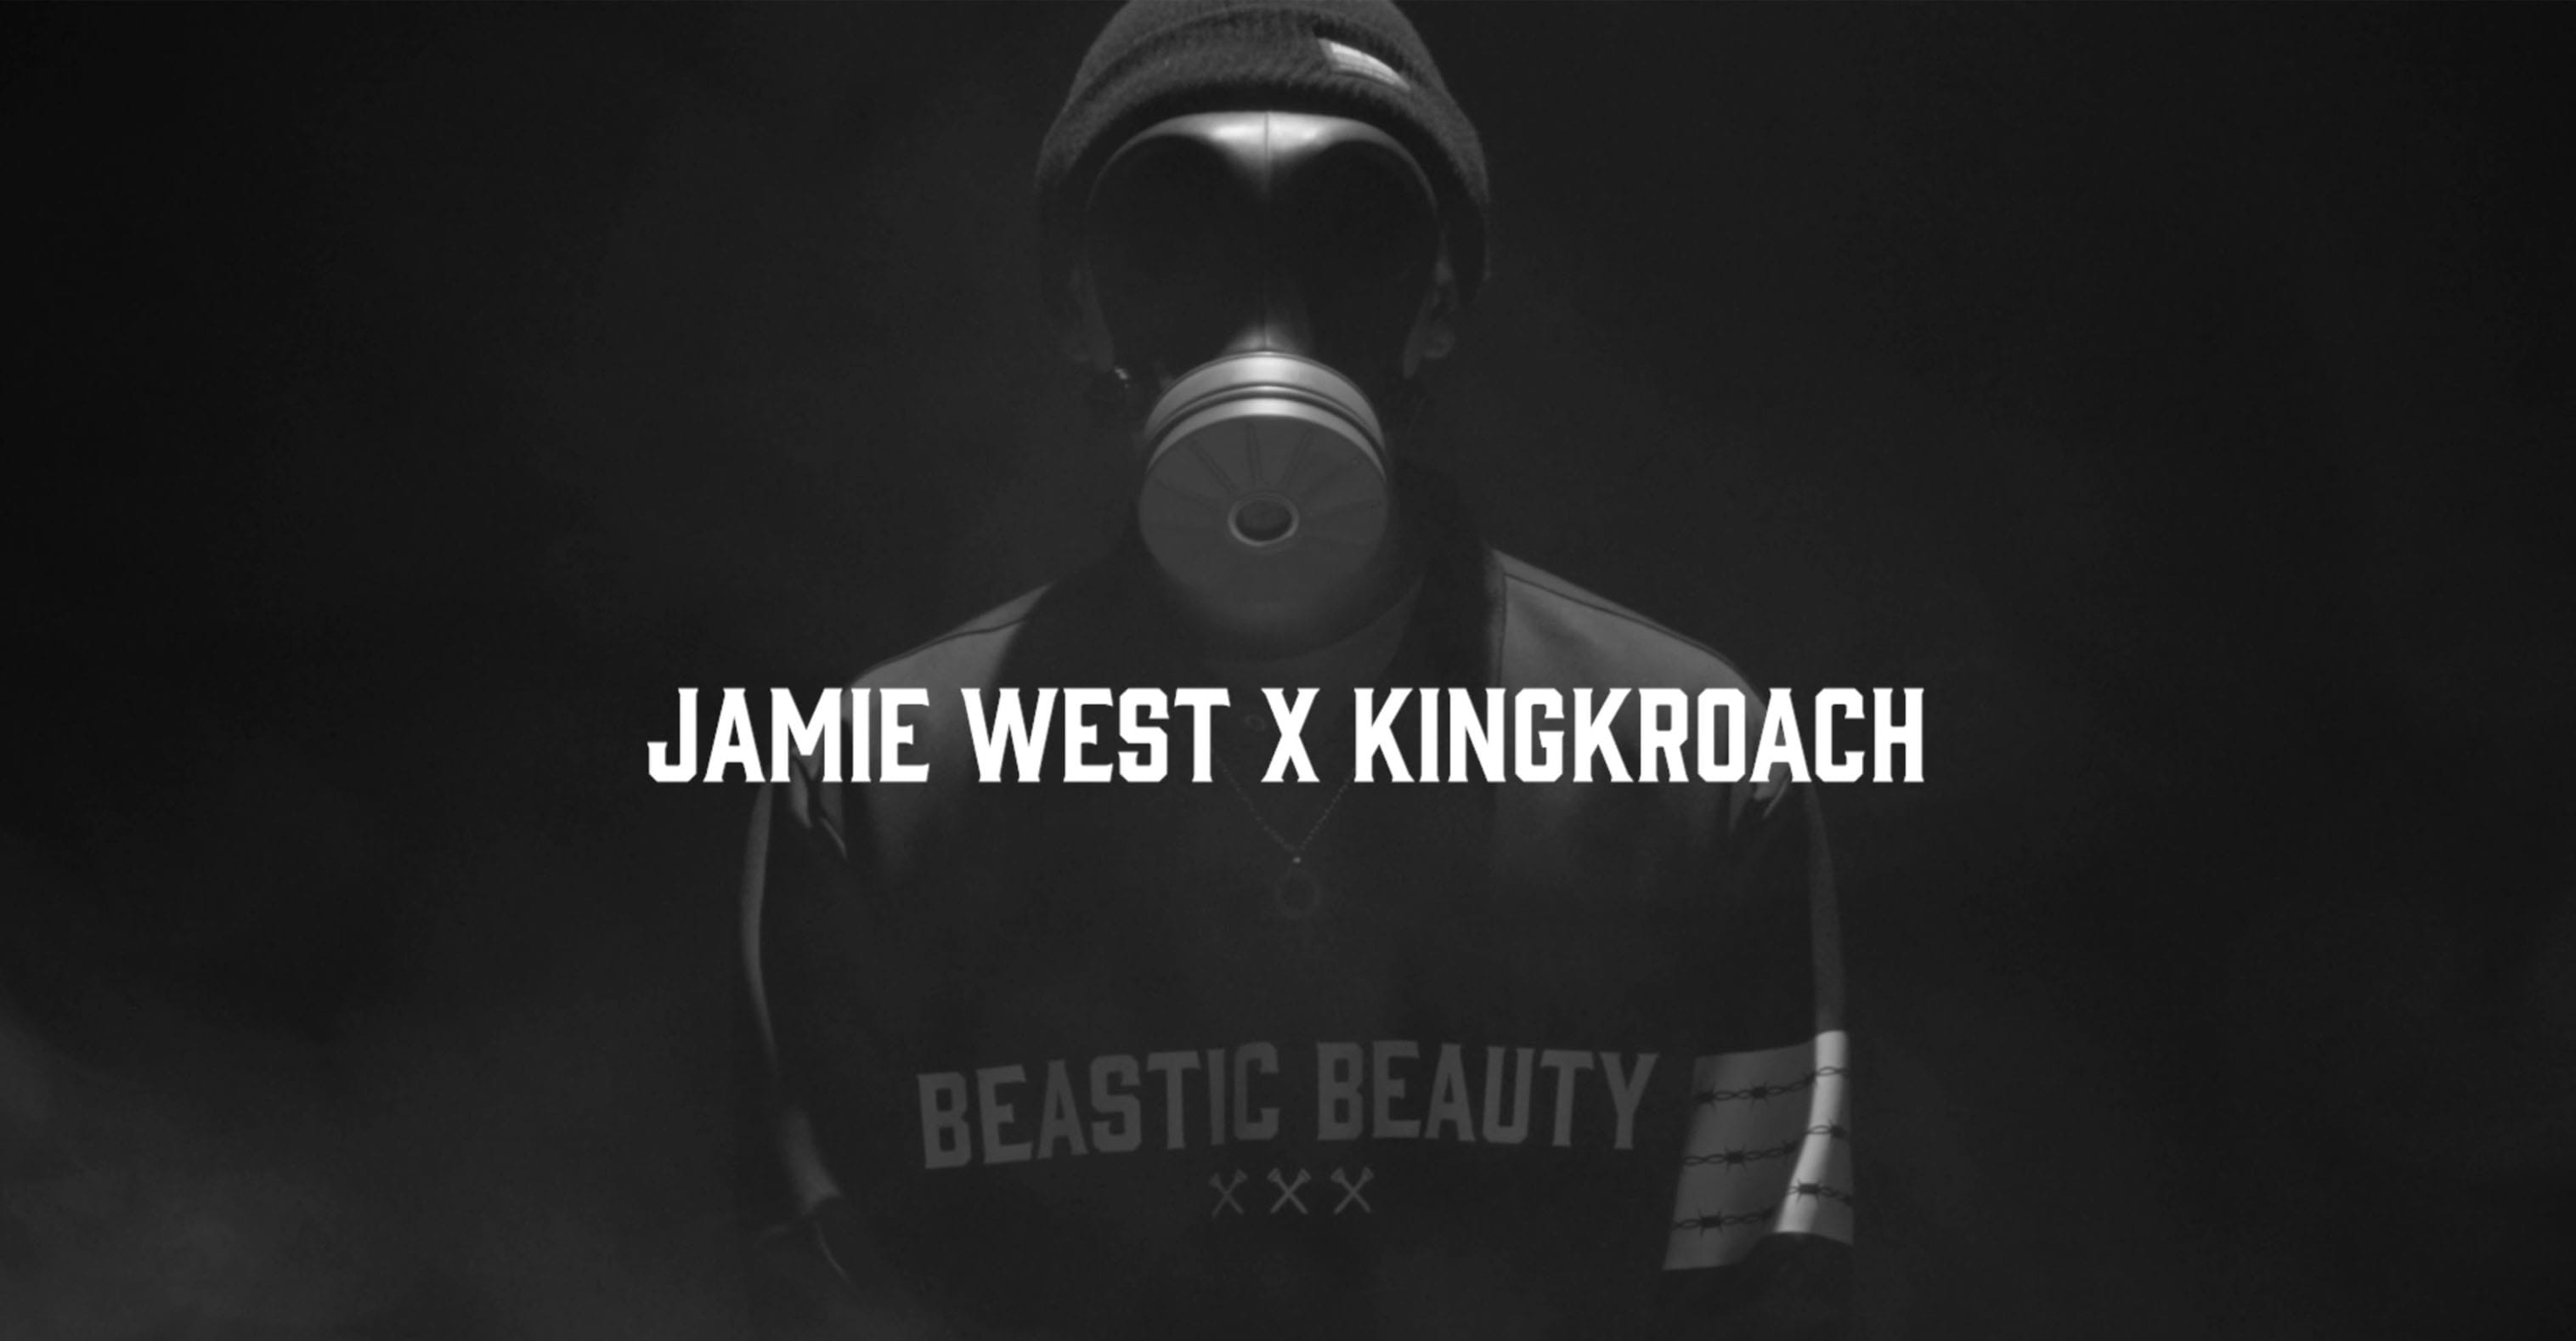 KING KROACH X JAMIE WEST